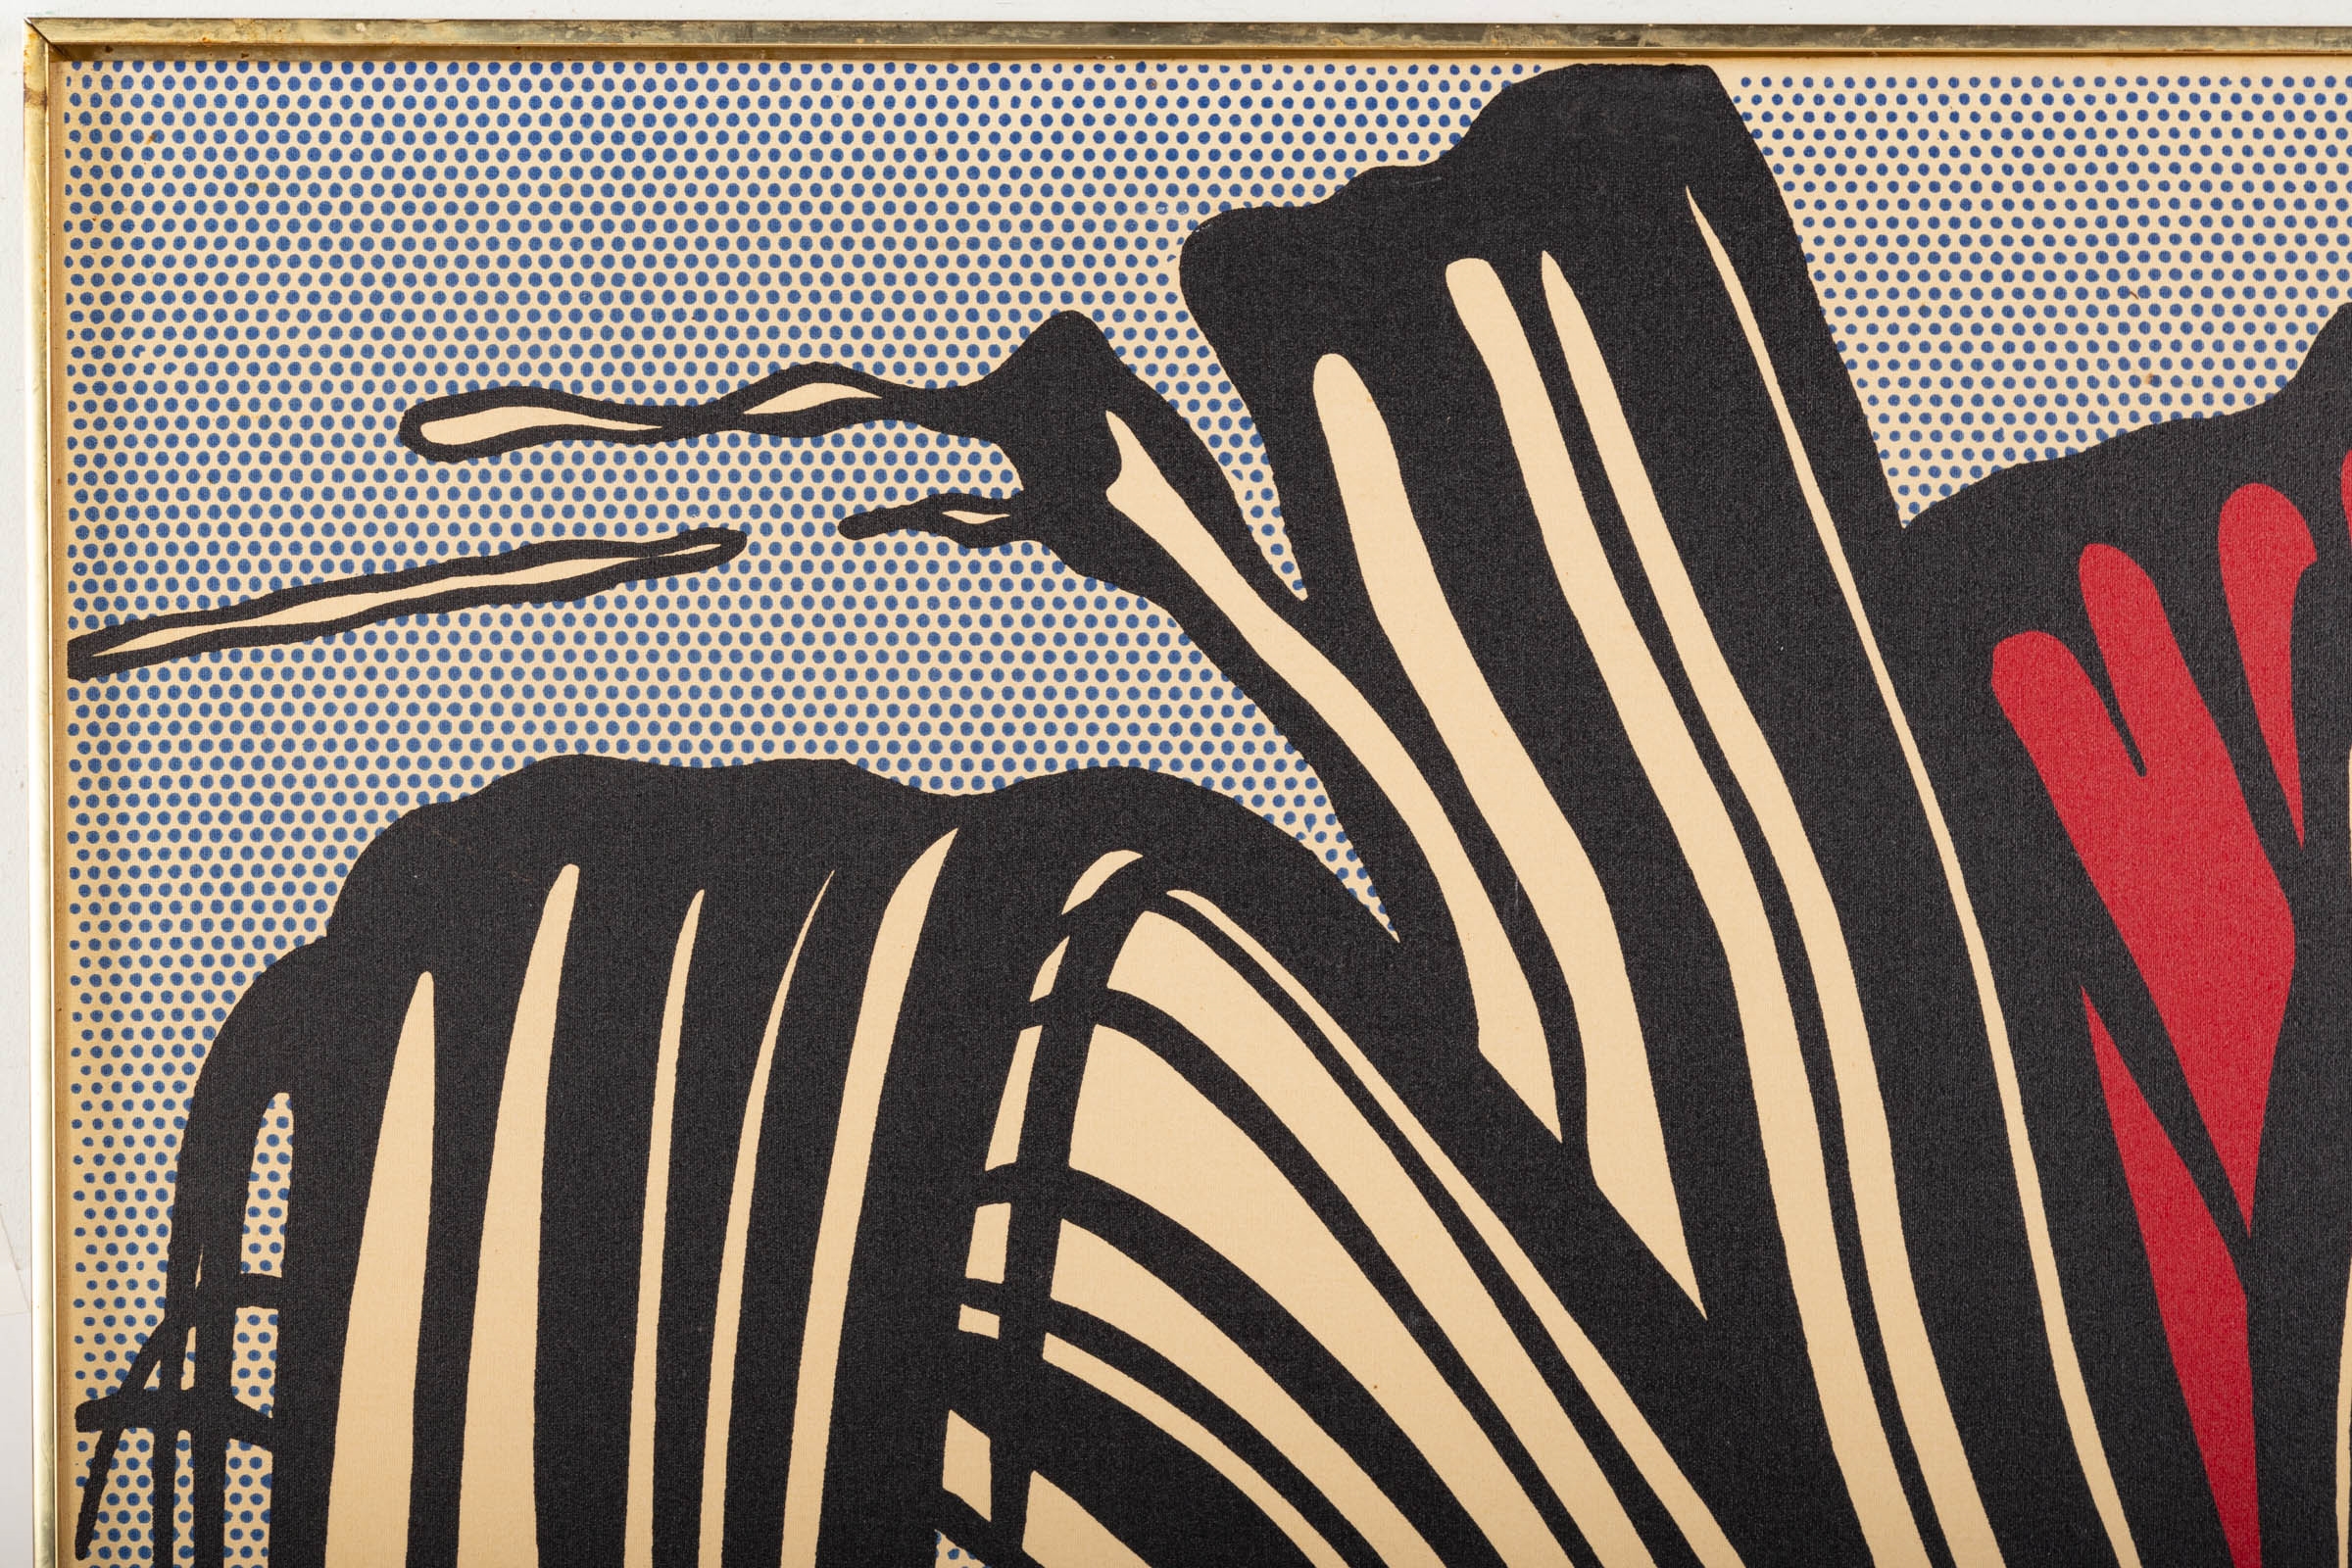 Artwork by Roy Lichtenstein, Brushstrokes, Made of Screenprint on canvas